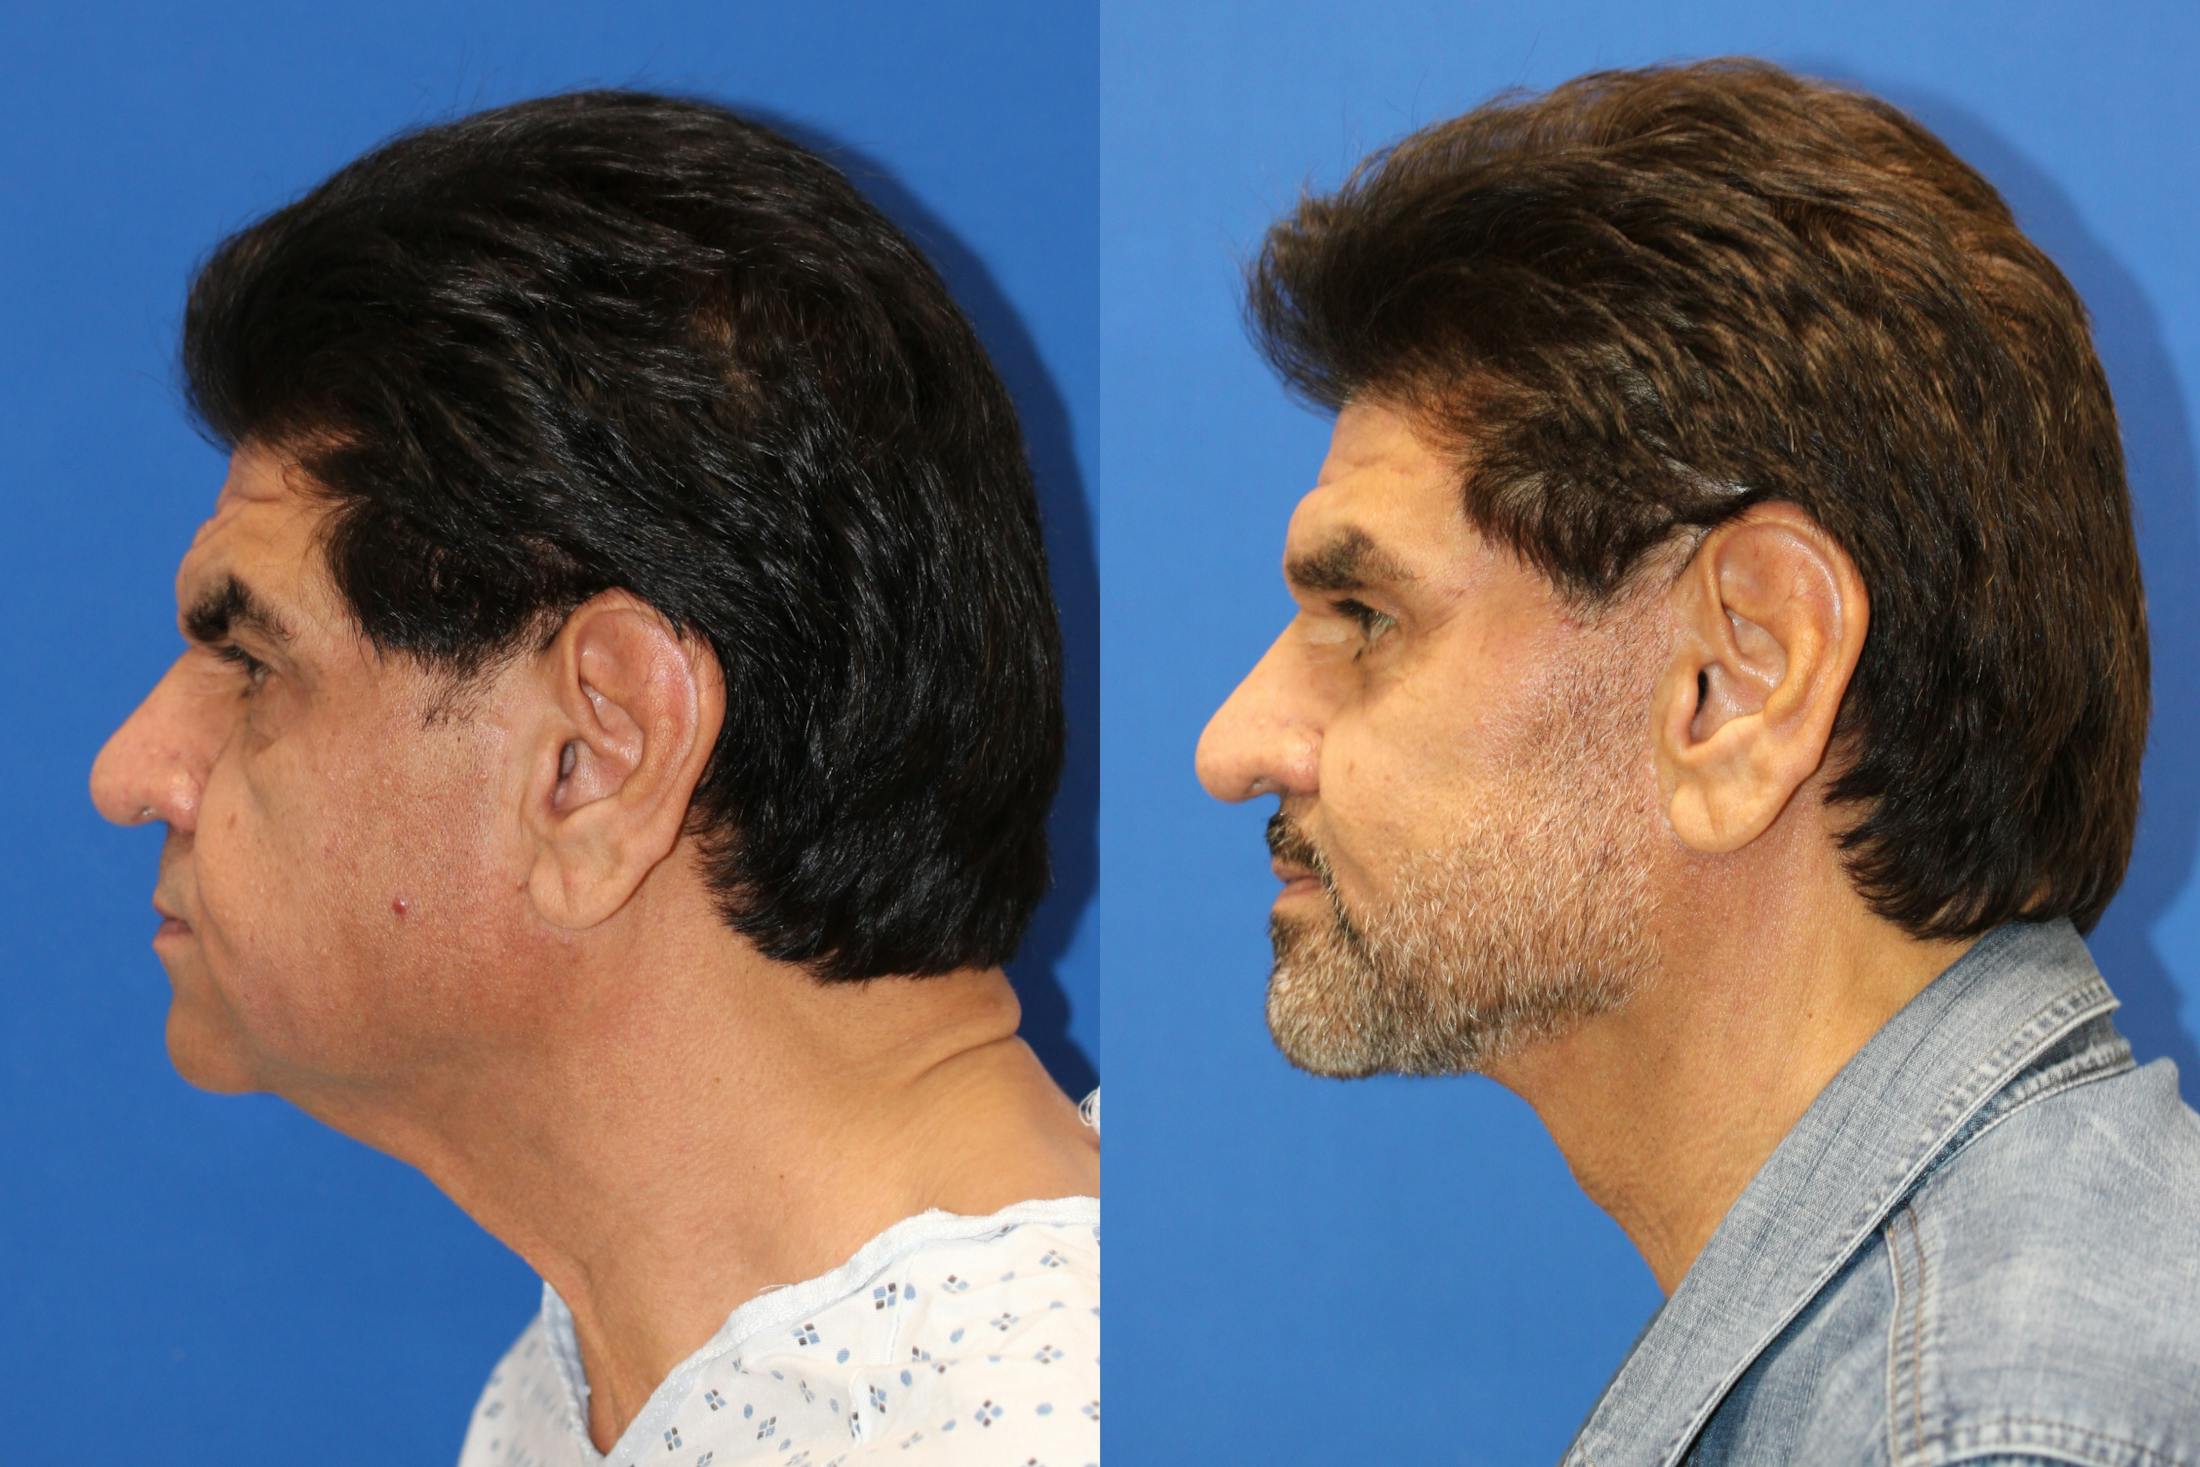 Vertical Restore® / Facial Rejuvenation Before & After Gallery - Patient 153265722 - Image 4